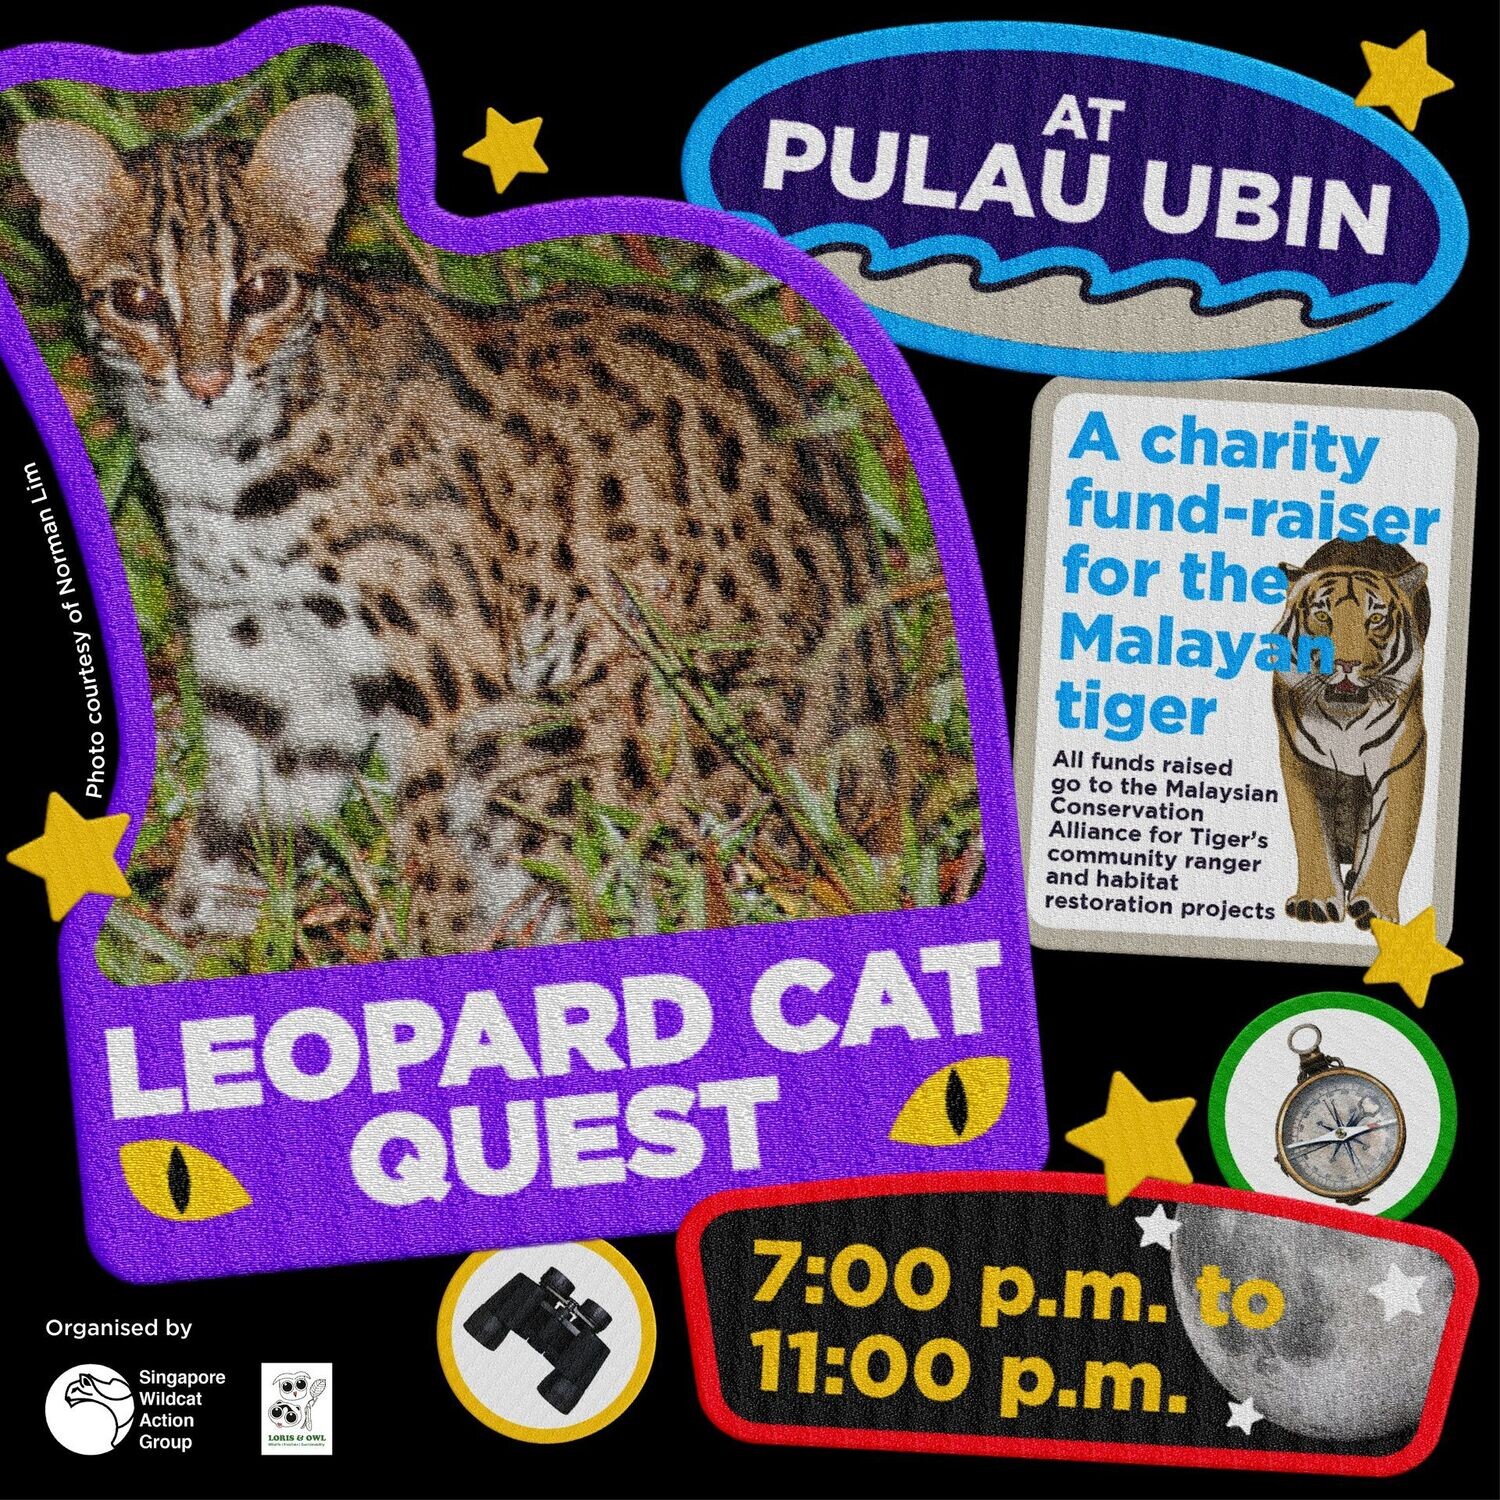 Leopard Cat QUEST @Ubin